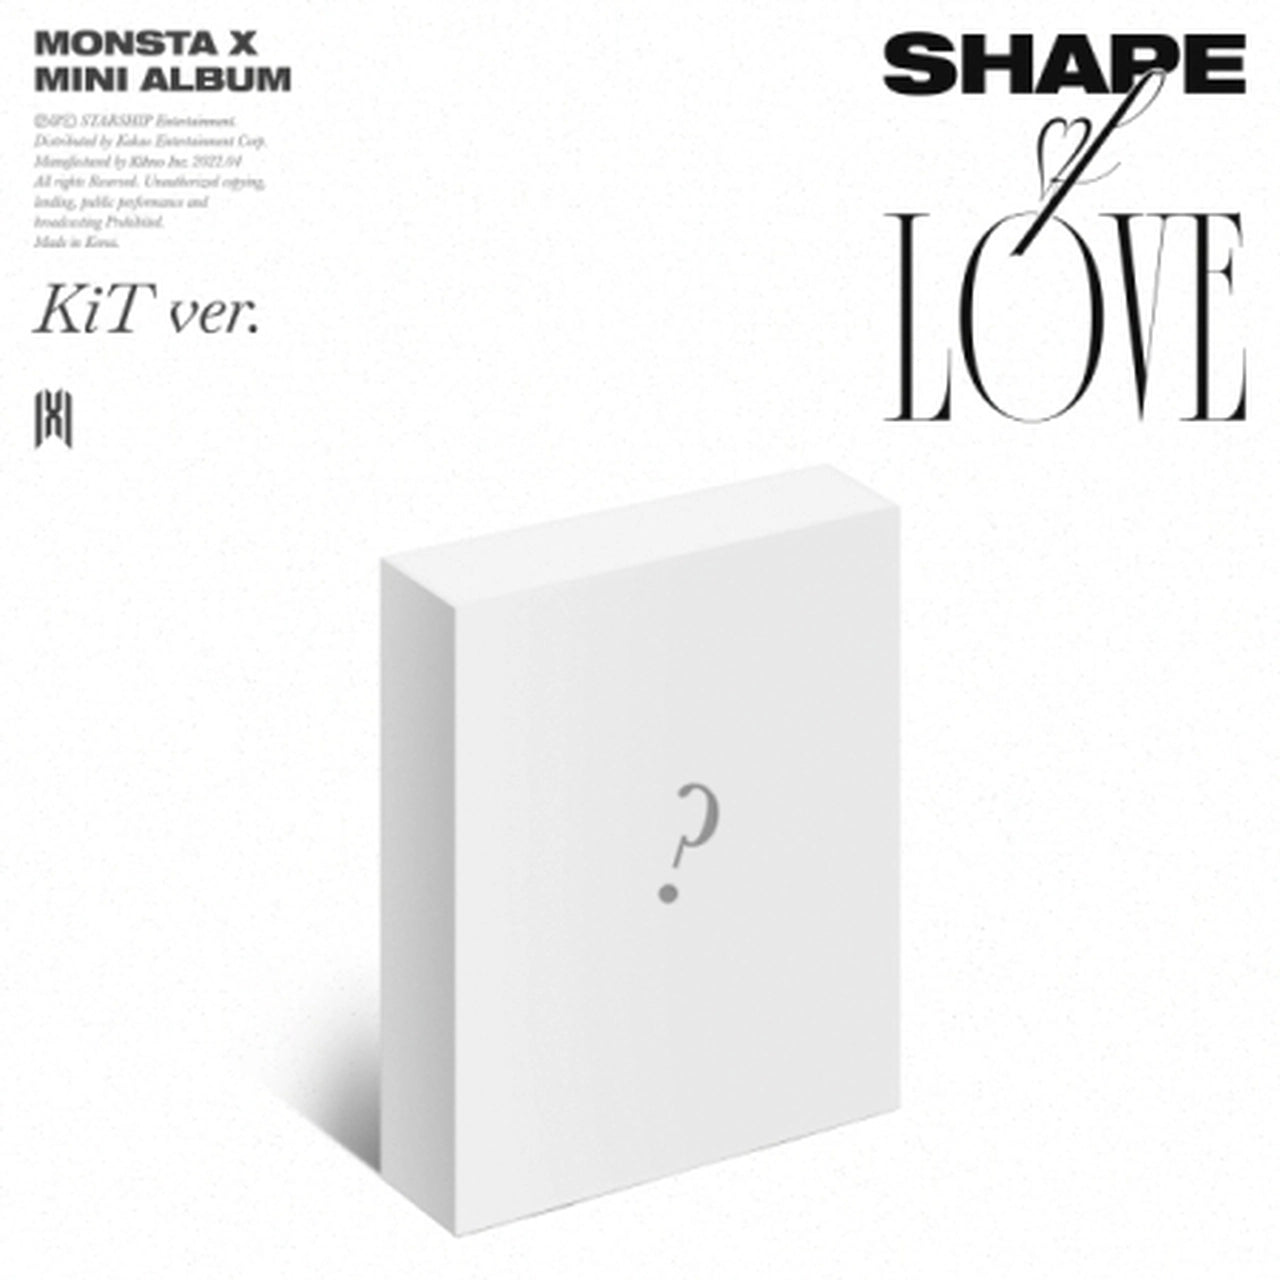 Monsta X - SHAPE OF LOVE: letras e músicas